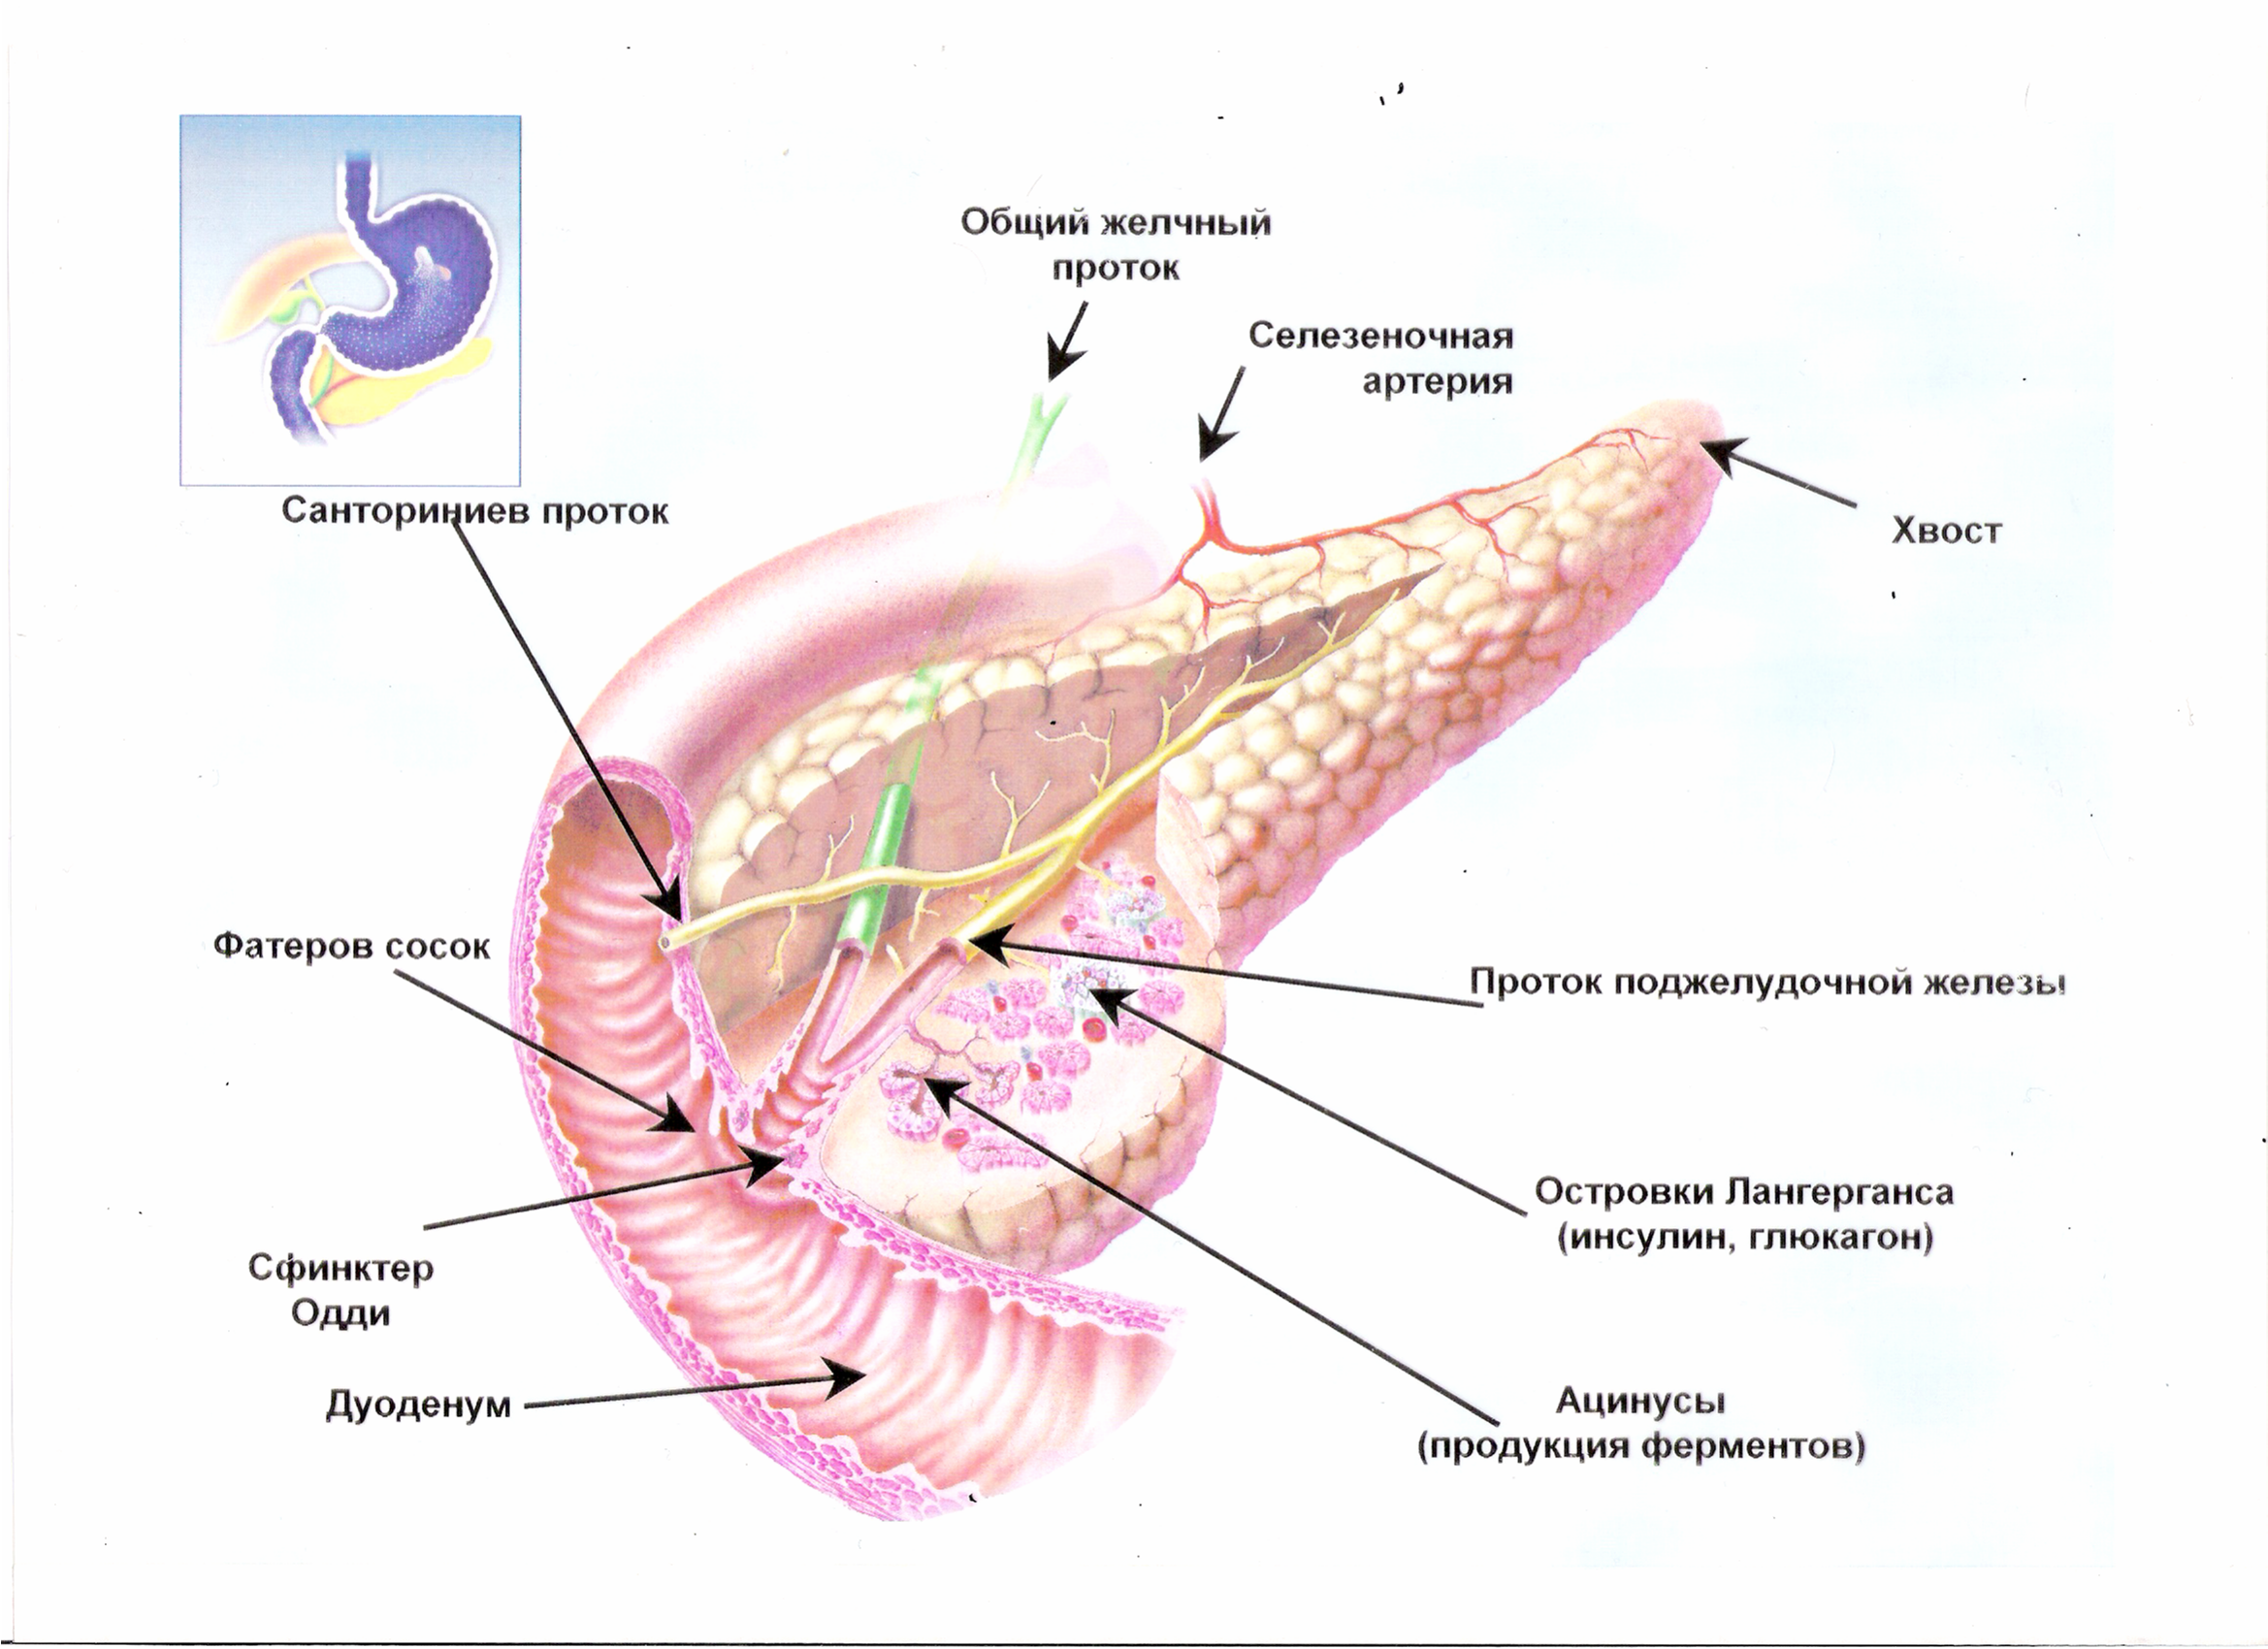 Вирсунгов проток это. Санториниев проток поджелудочной. Вирсунгов проток поджелудочной железы. Протоковая система поджелудочной железы. Поджелудочная железа строение и функции анатомия.